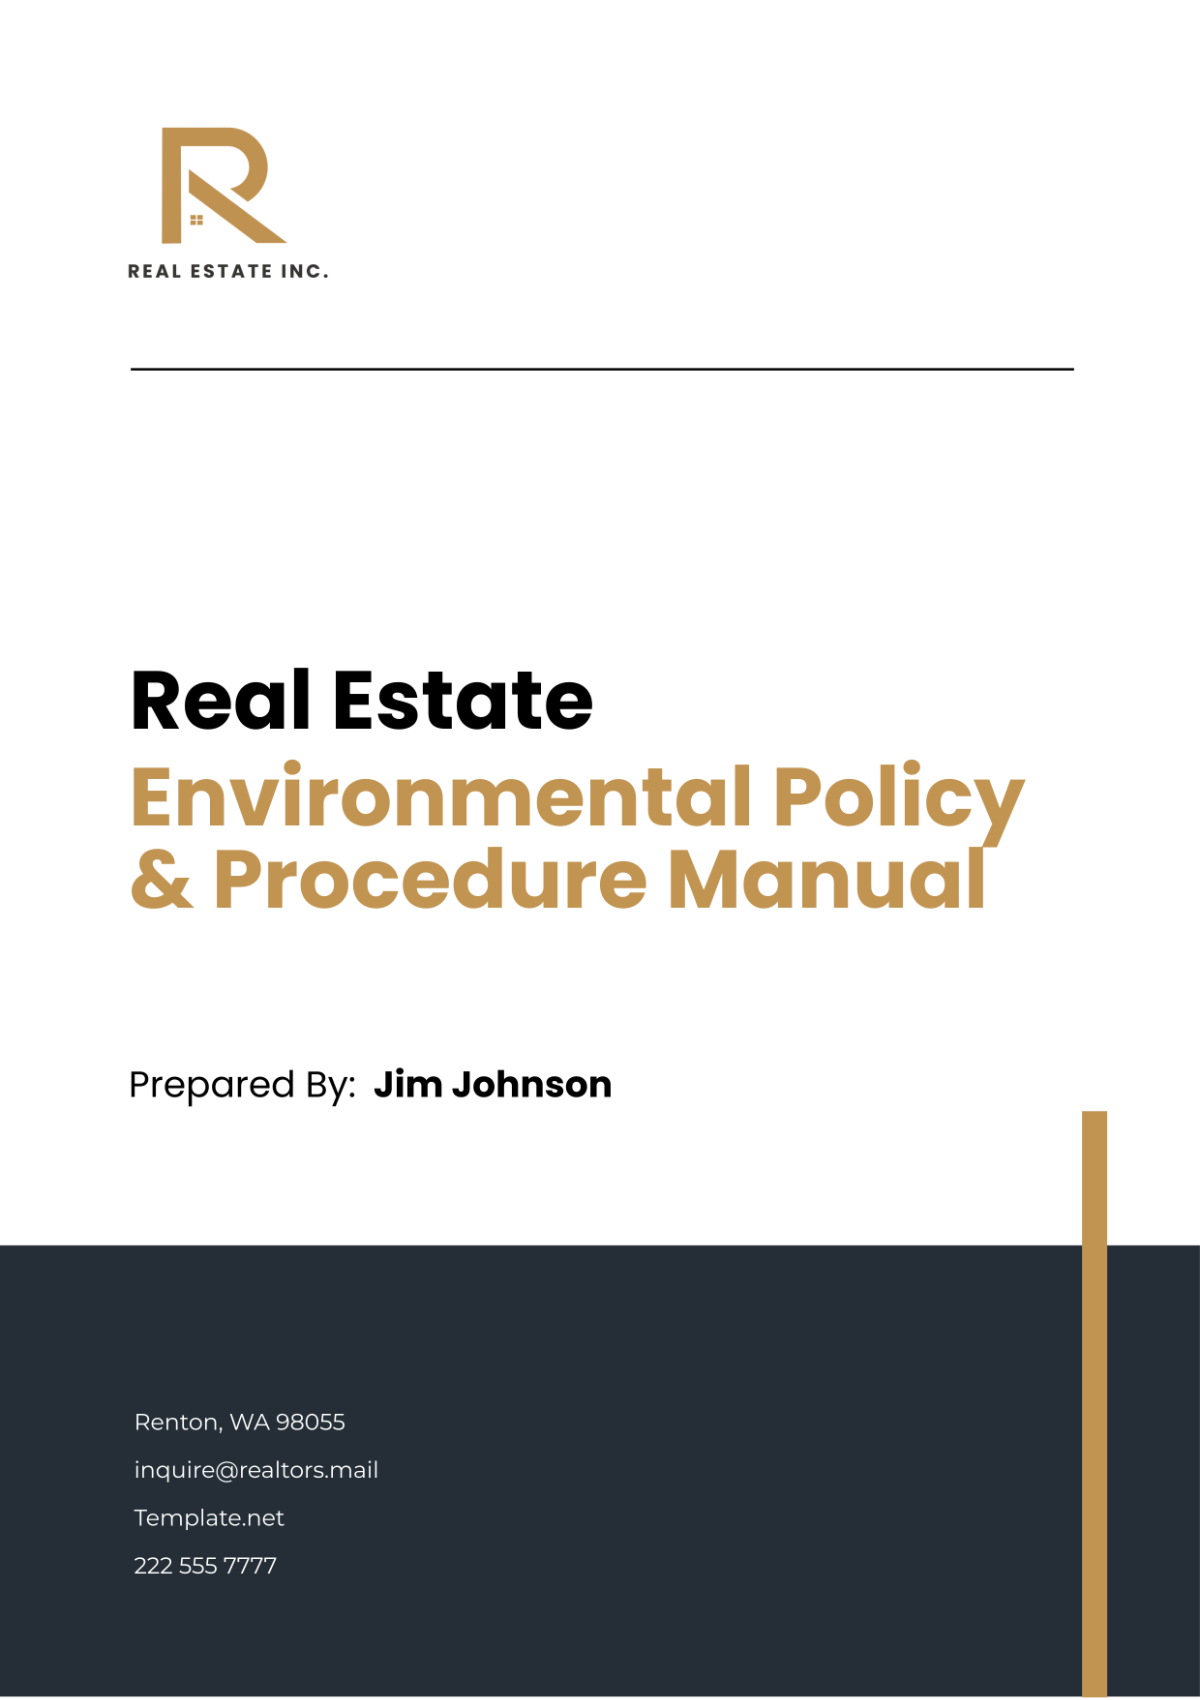 Real Estate Environmental Policy & Procedure Manual Template